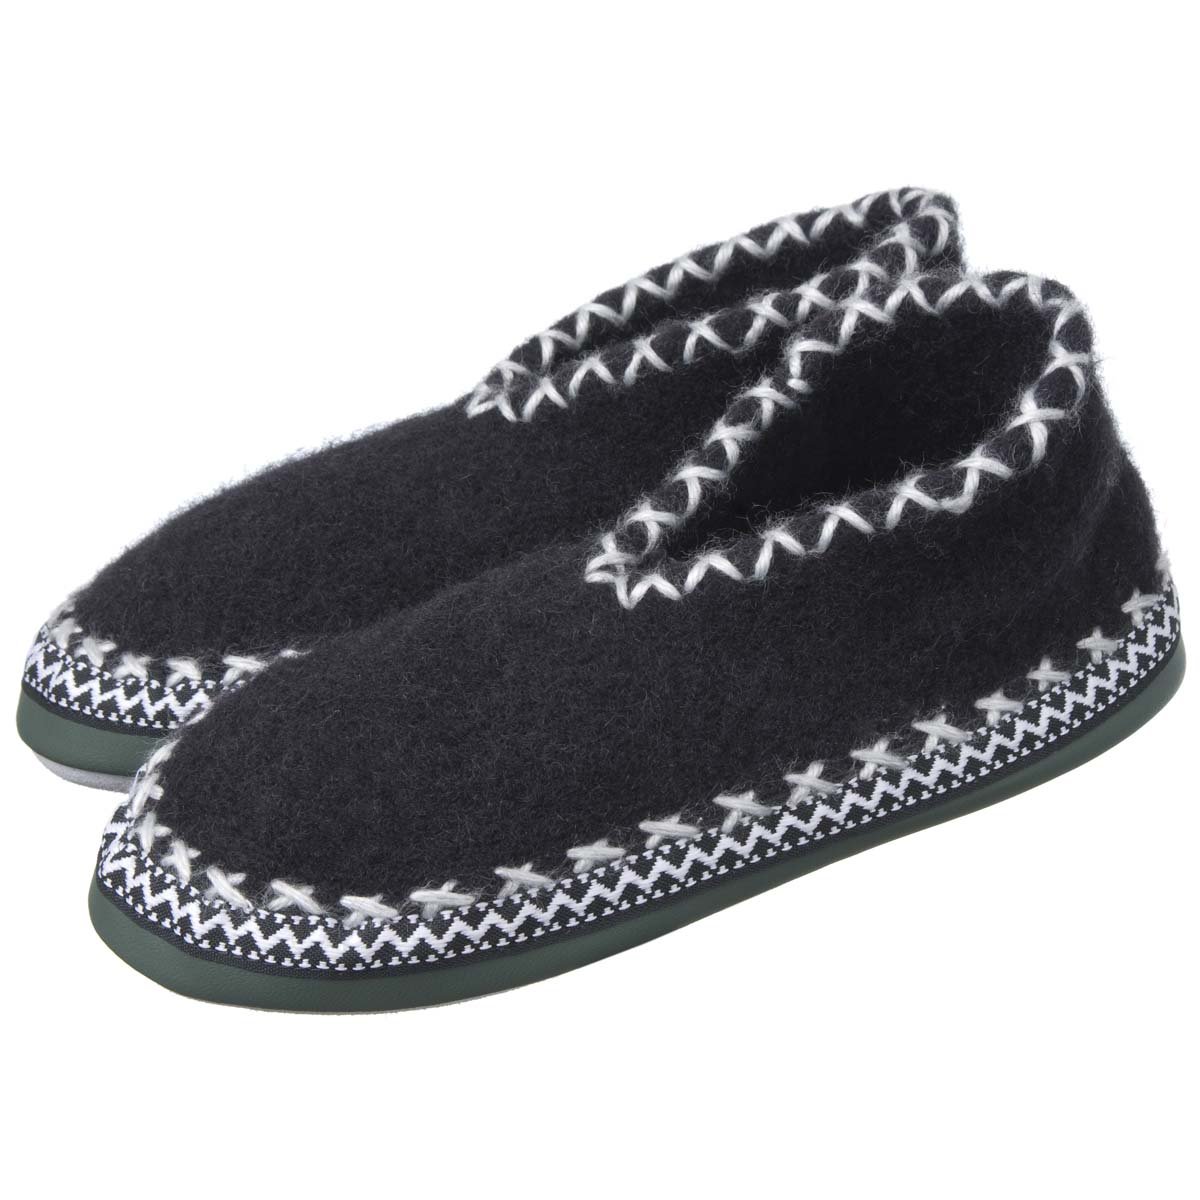 austrian boiled wool slippers